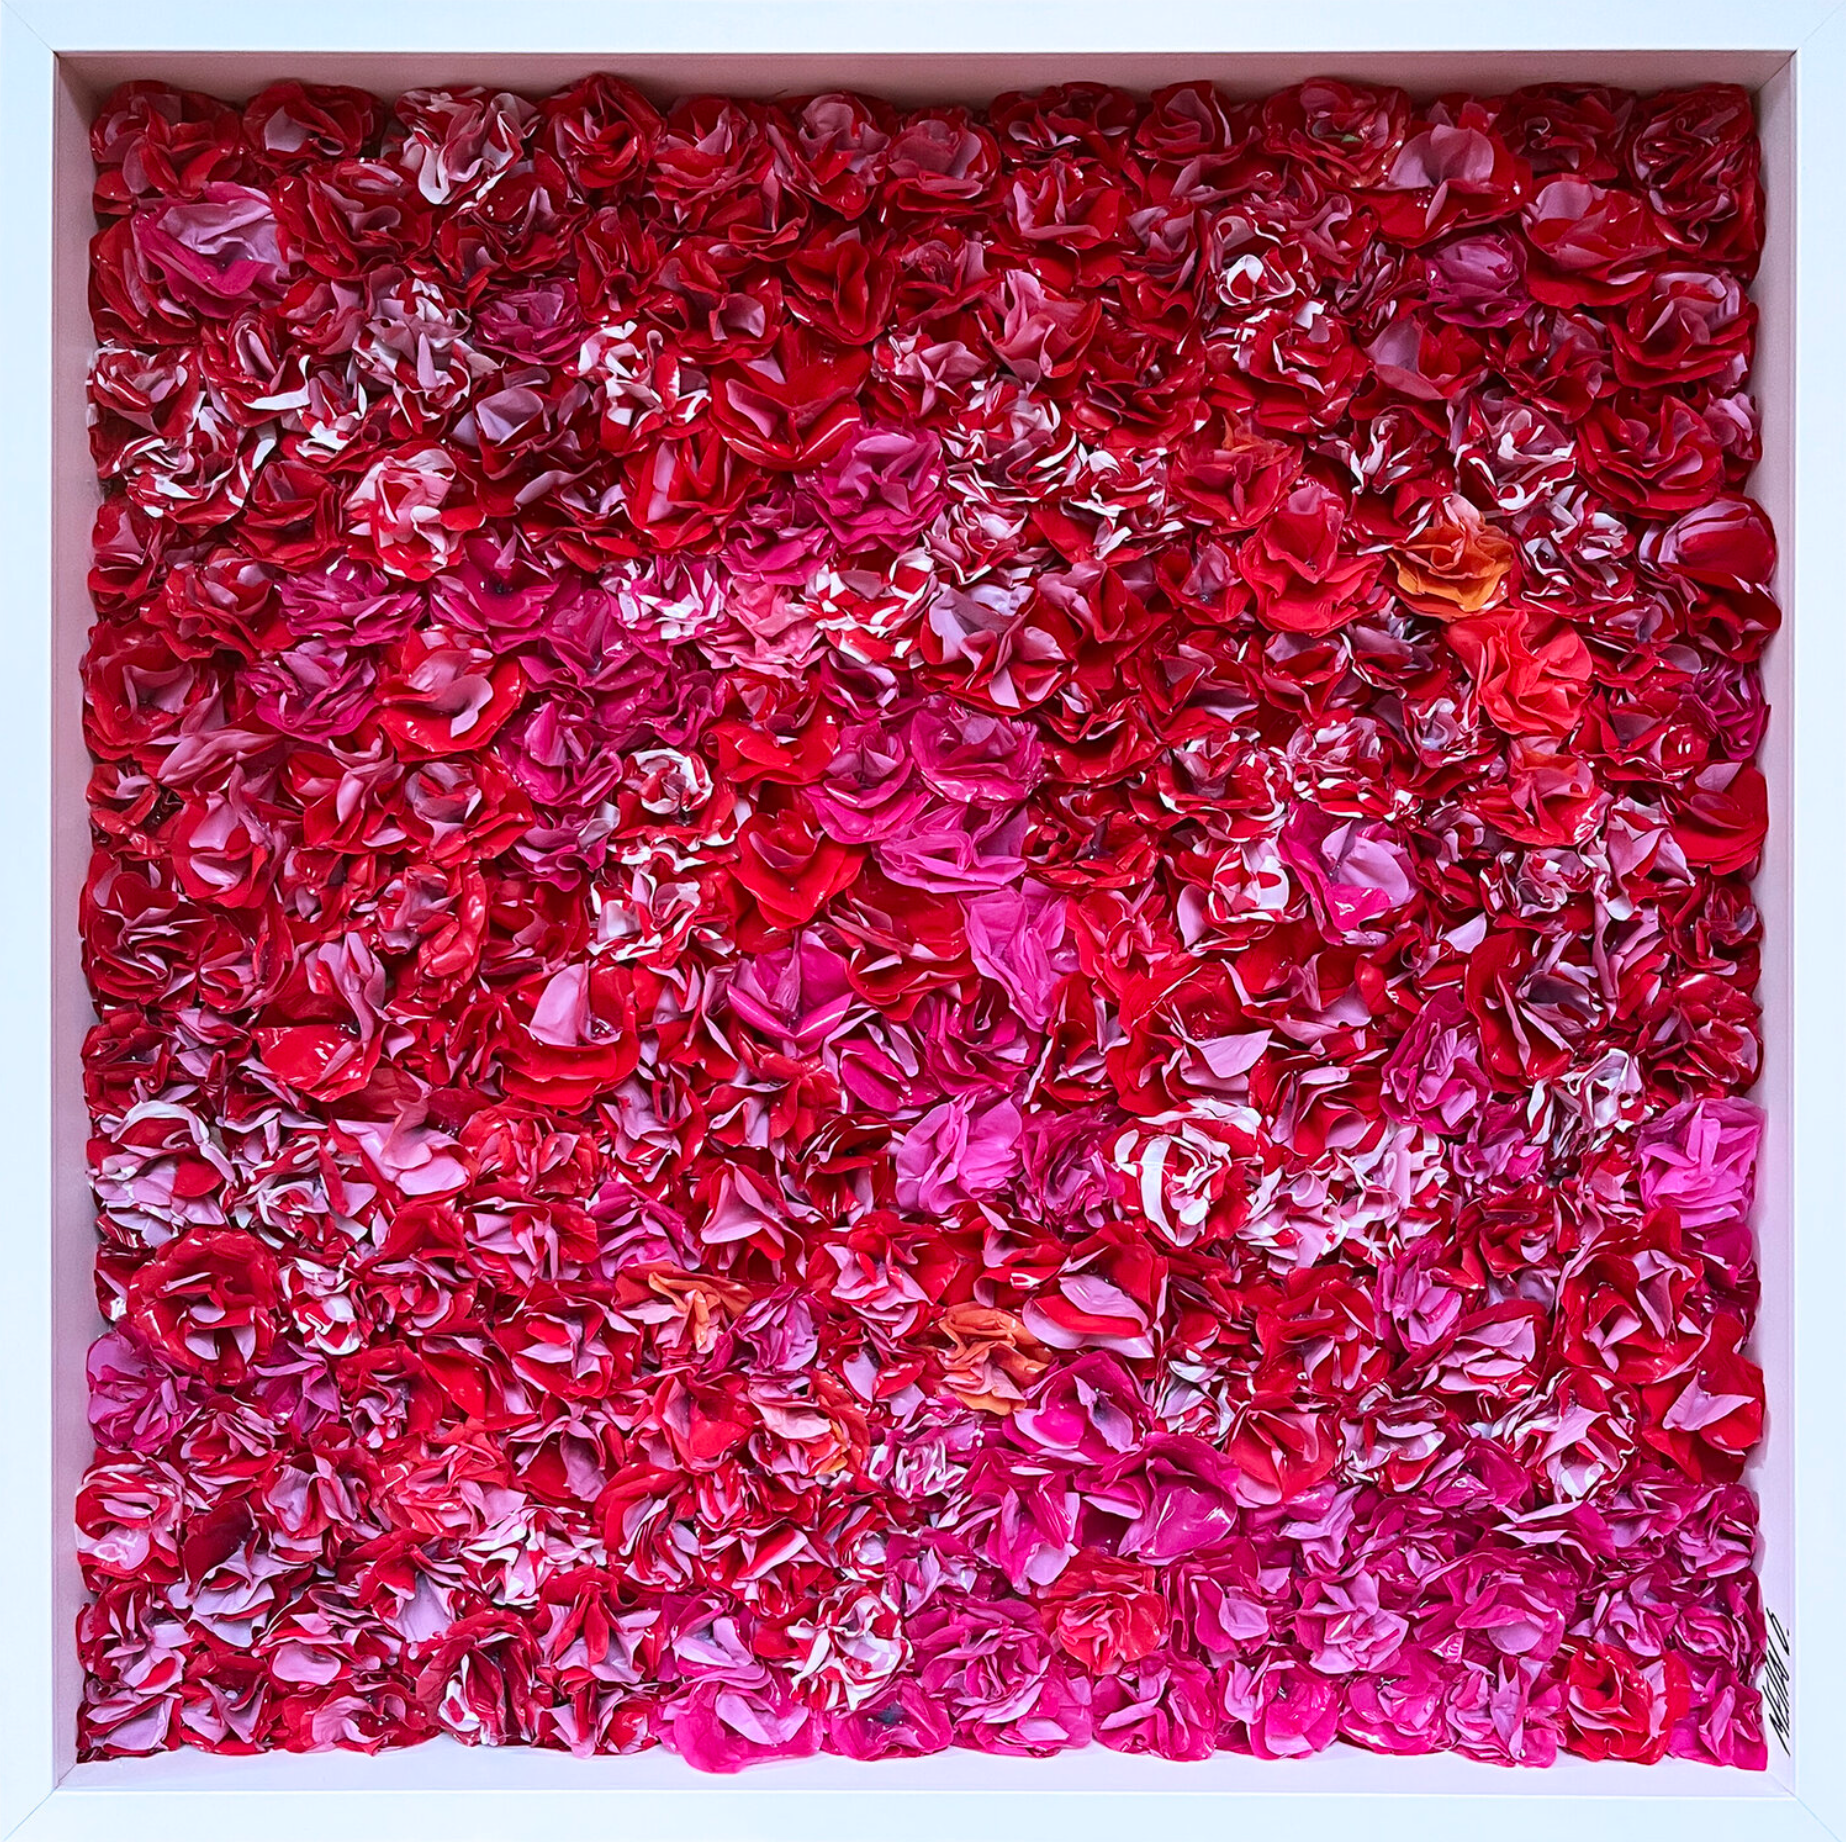 Oliver Messas "Pasión..." Collage, pintura abstracta de flores rojas.